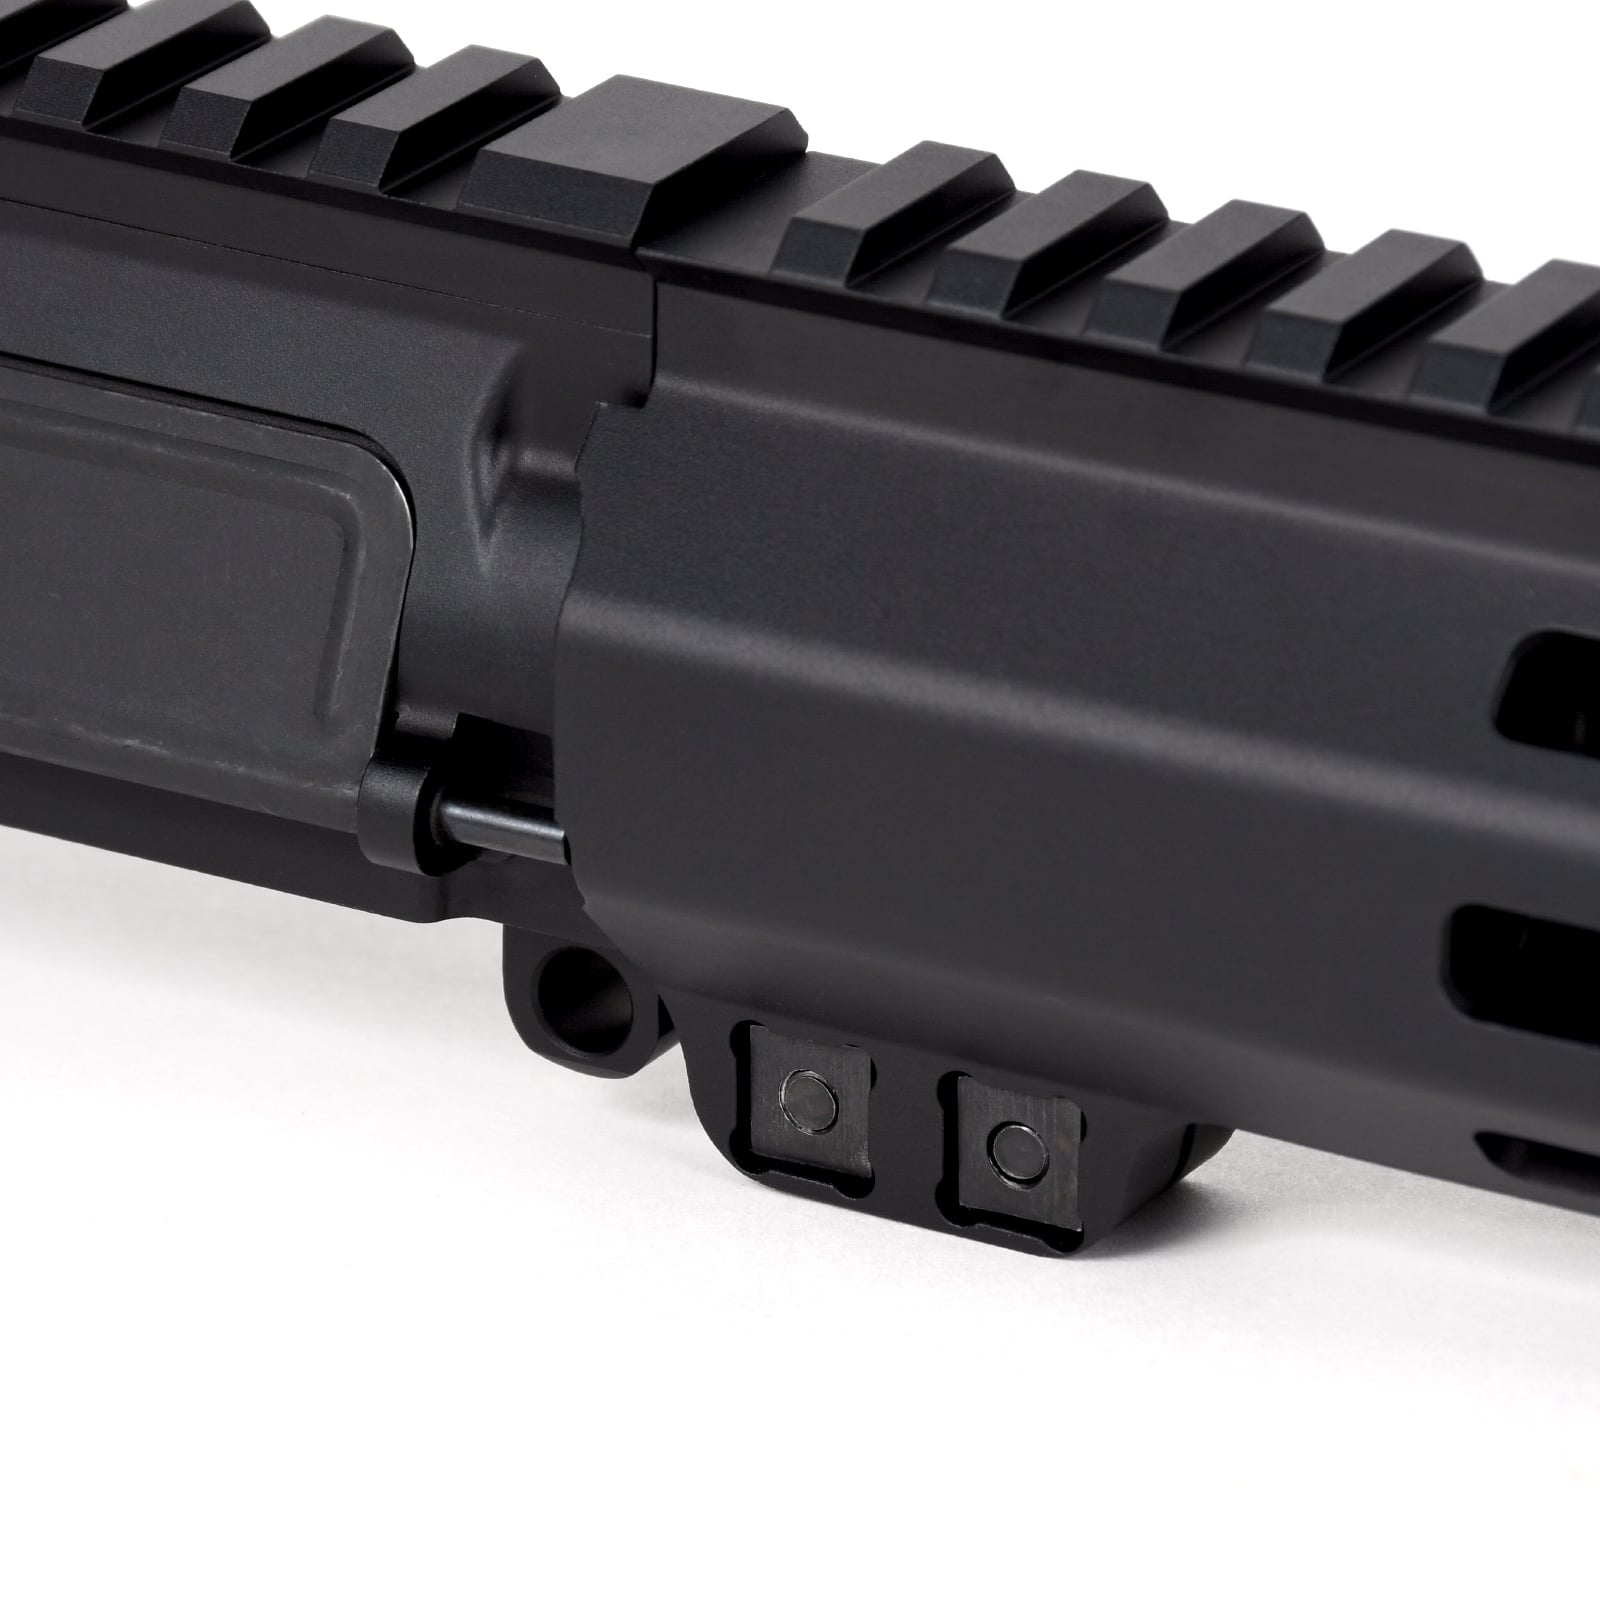 High Value AR-15 Handguard | Range Tool 15 Inch M-LOK Handguard